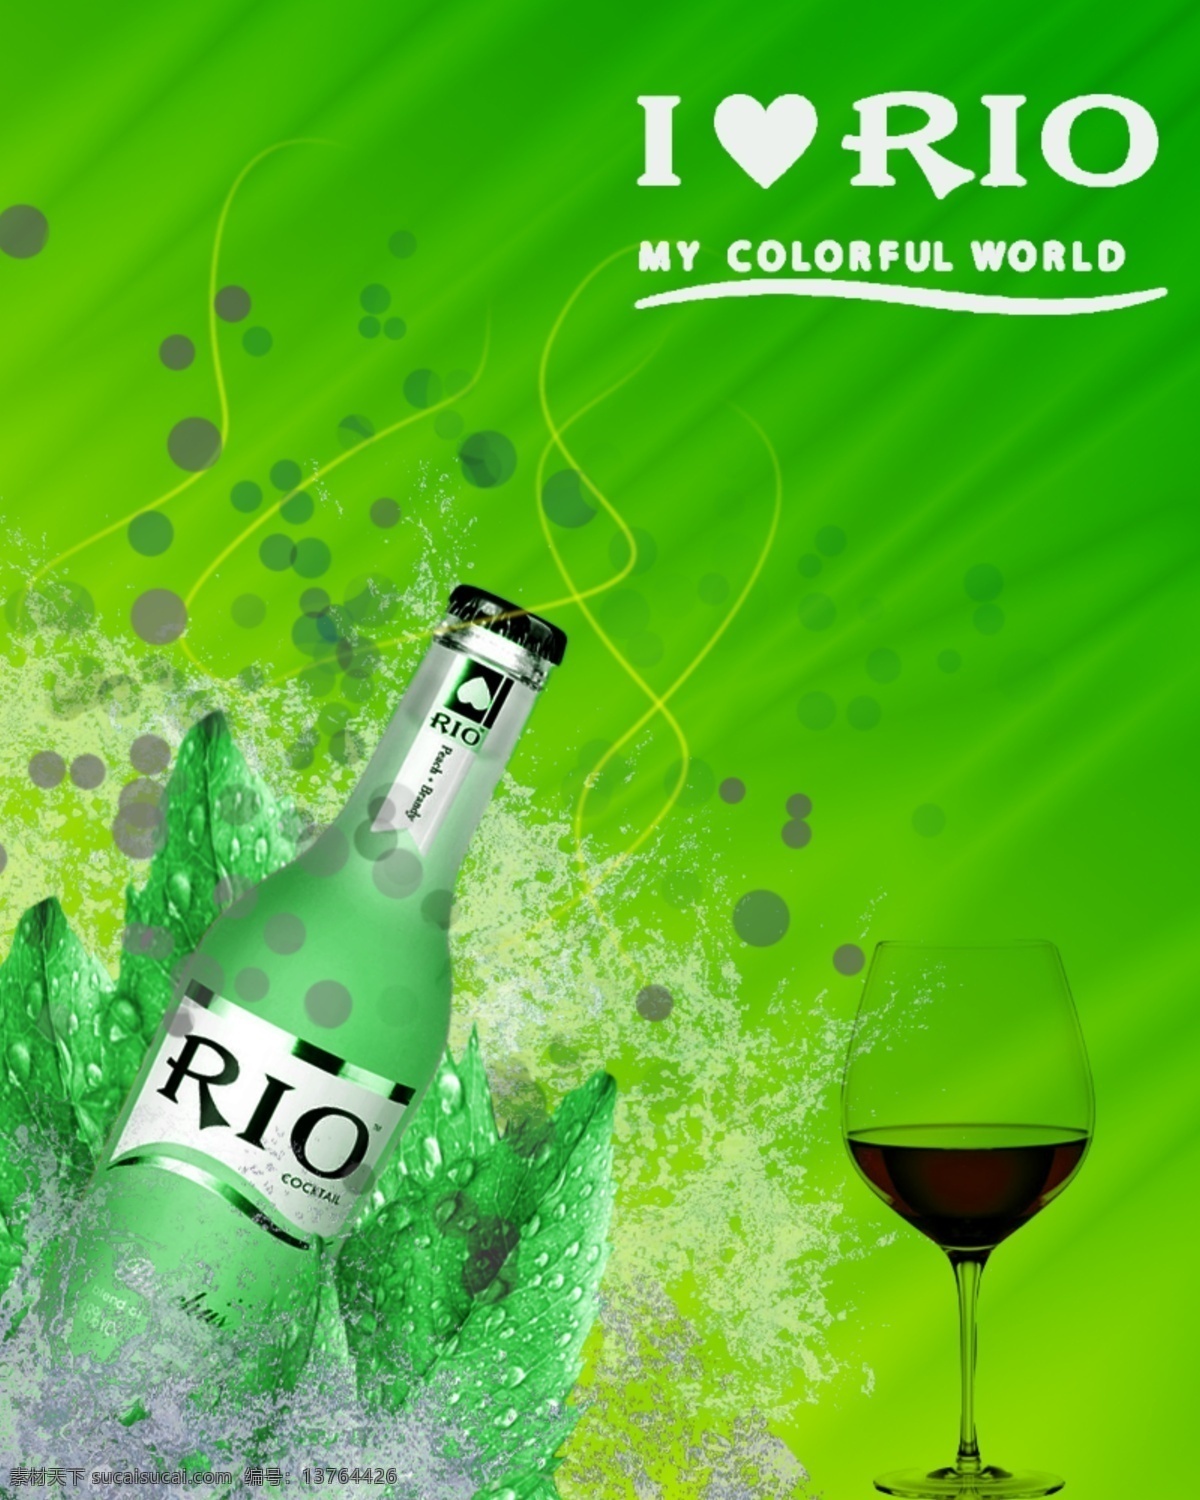 rio海报 rio的广告 凉爽 食欲强 环保